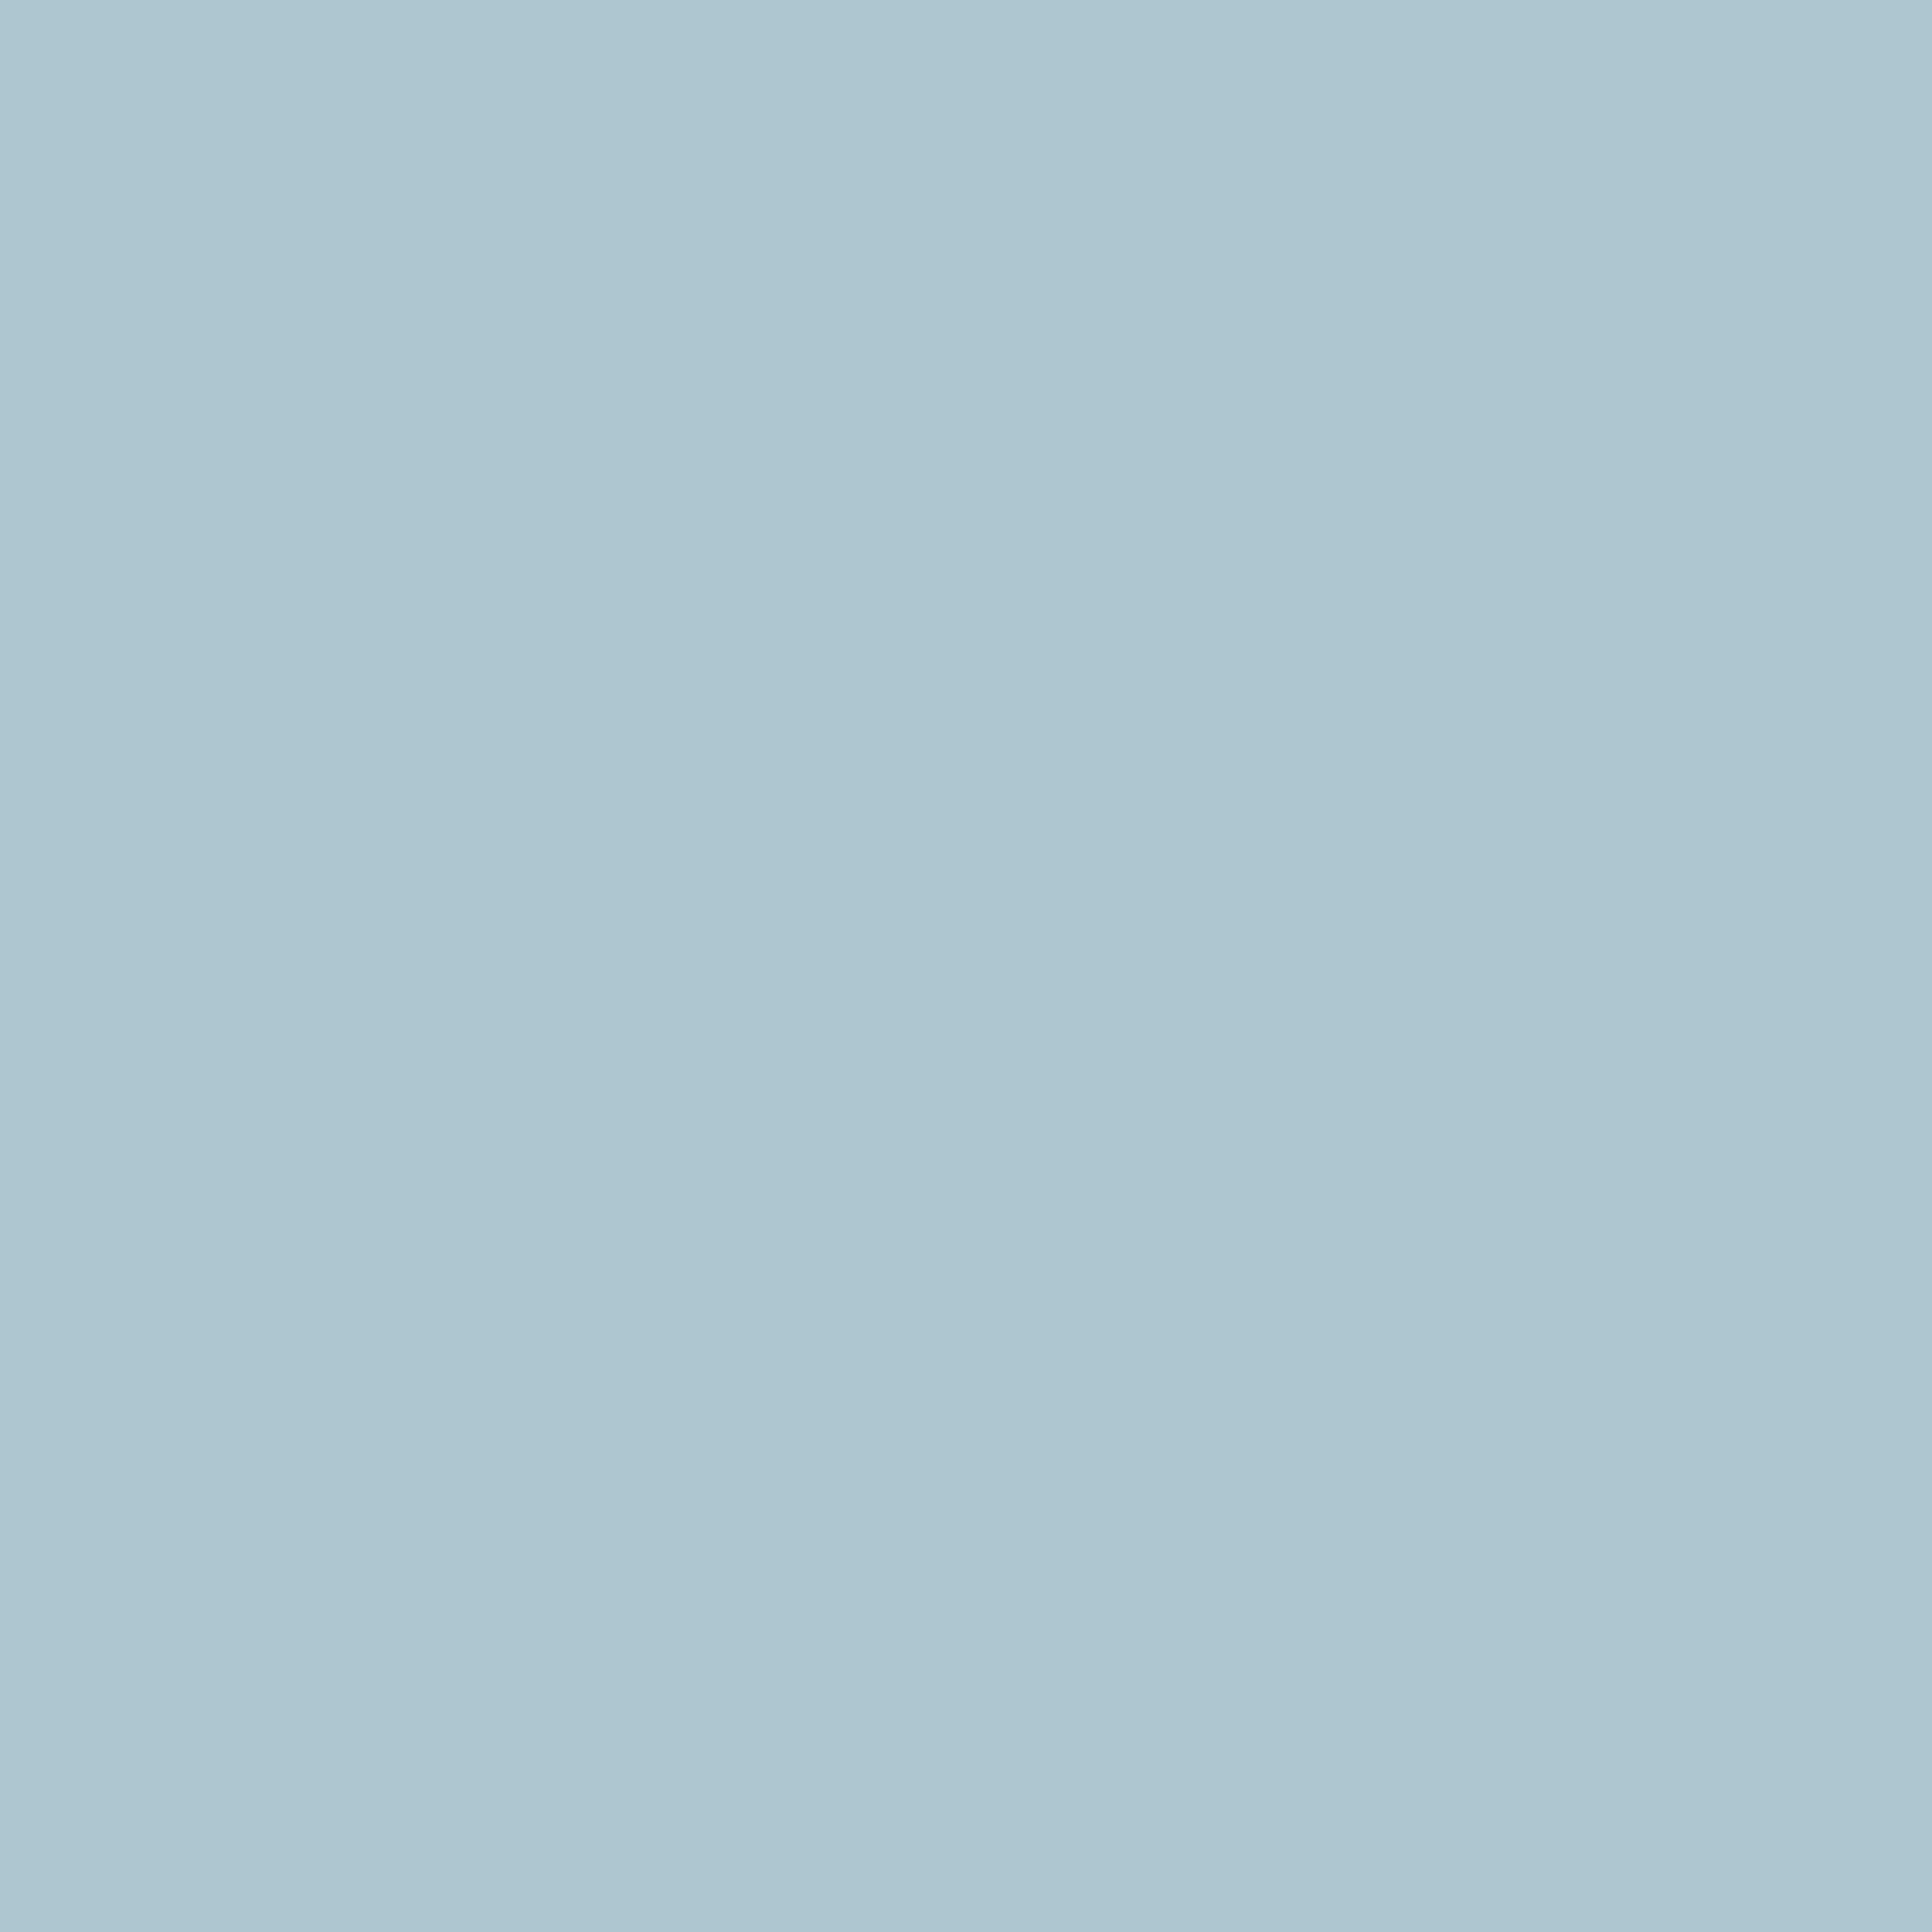 2732x2732 Pastel Blue Solid Color Background